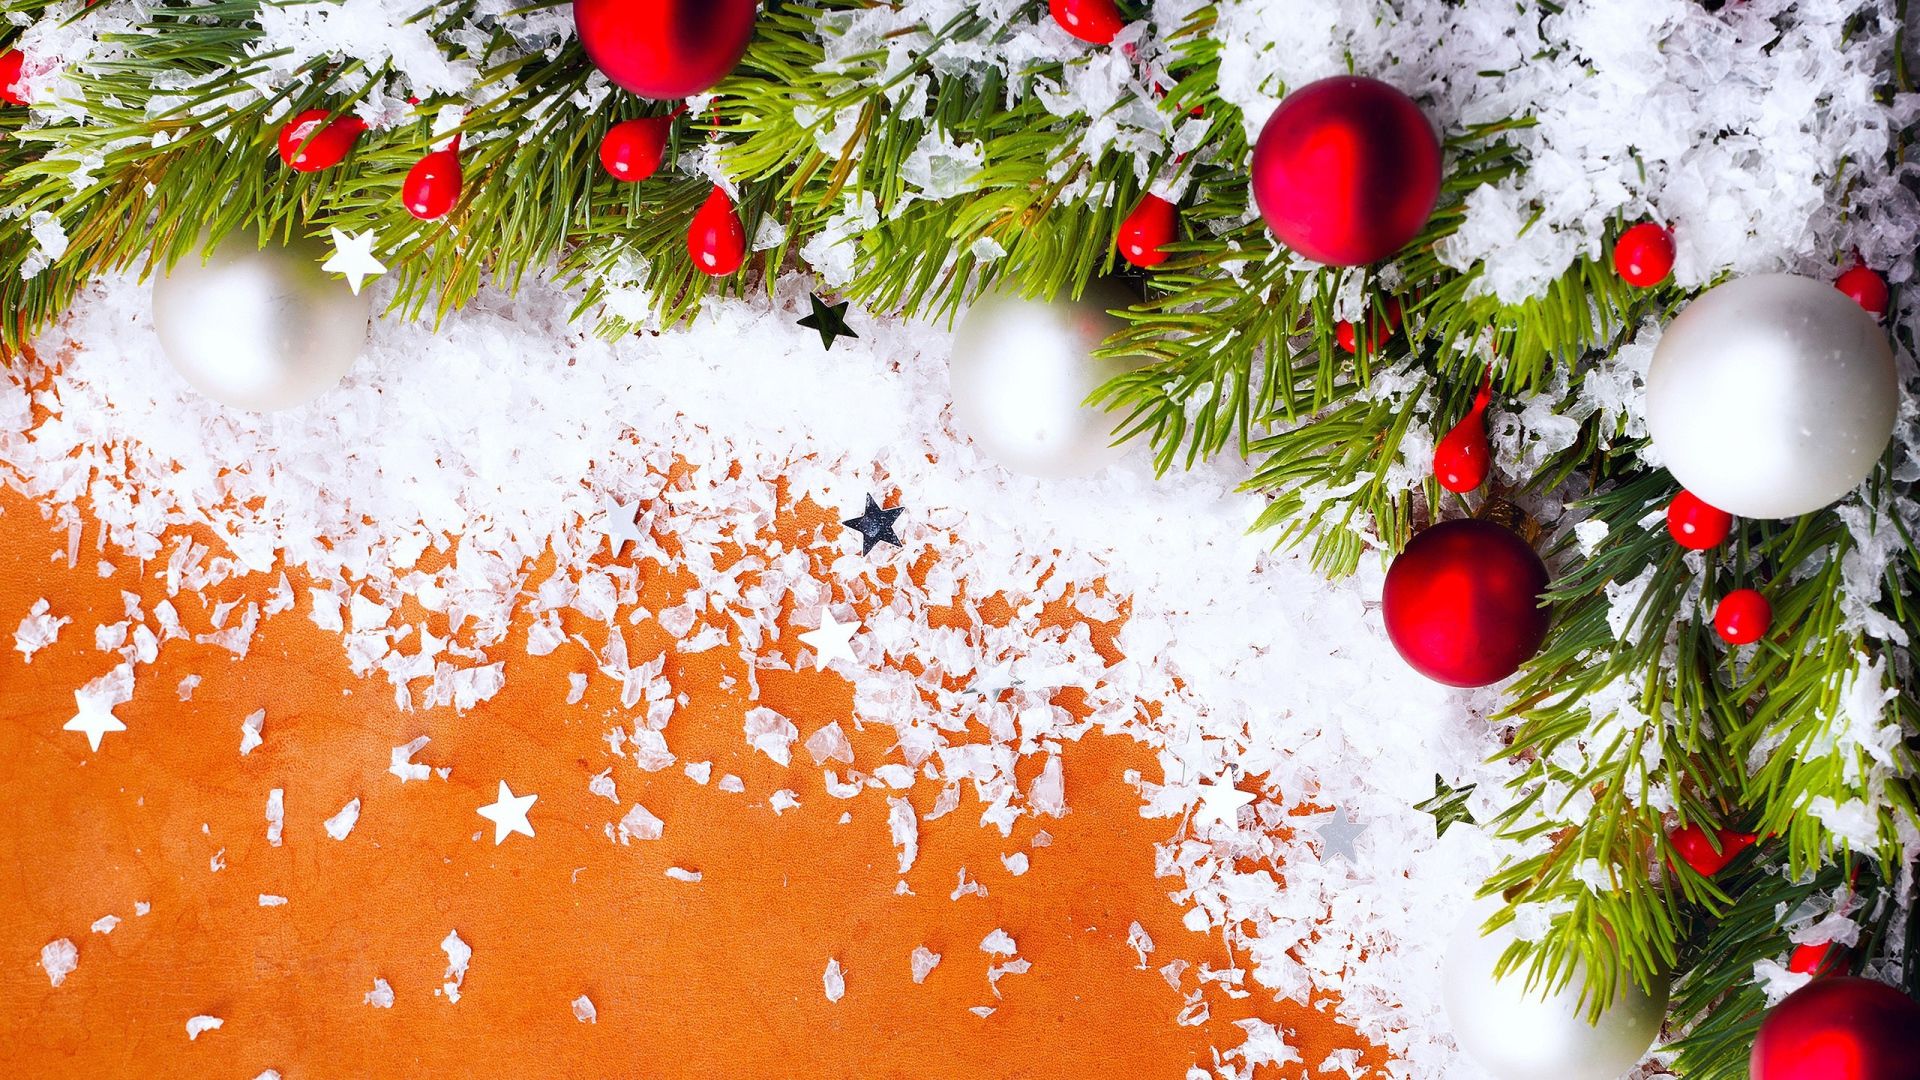 Festive decoration on an orange background for Christmas Desktop wallpaper 1920x1080